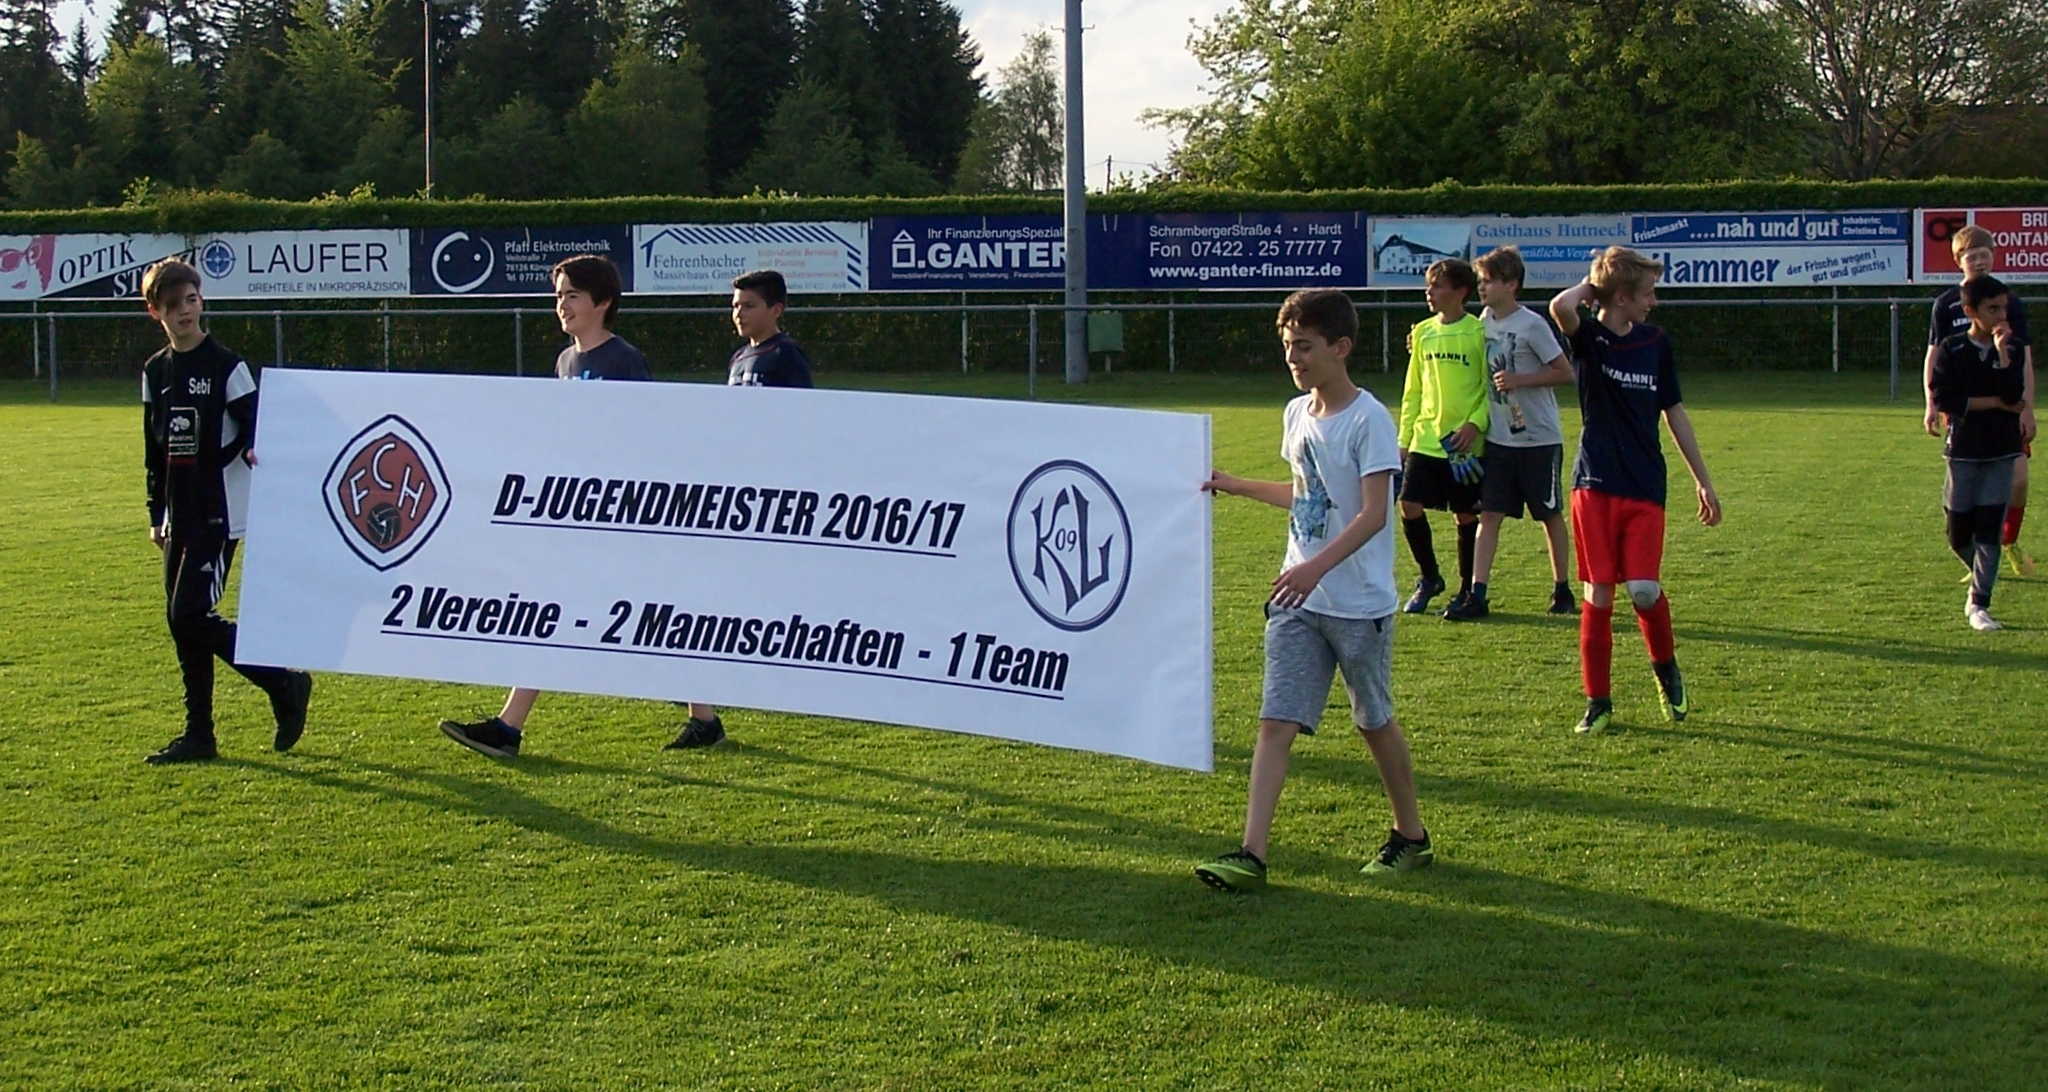 D-Jugendmeister 2 Vereine - 2 Mannschaften - 1 Team